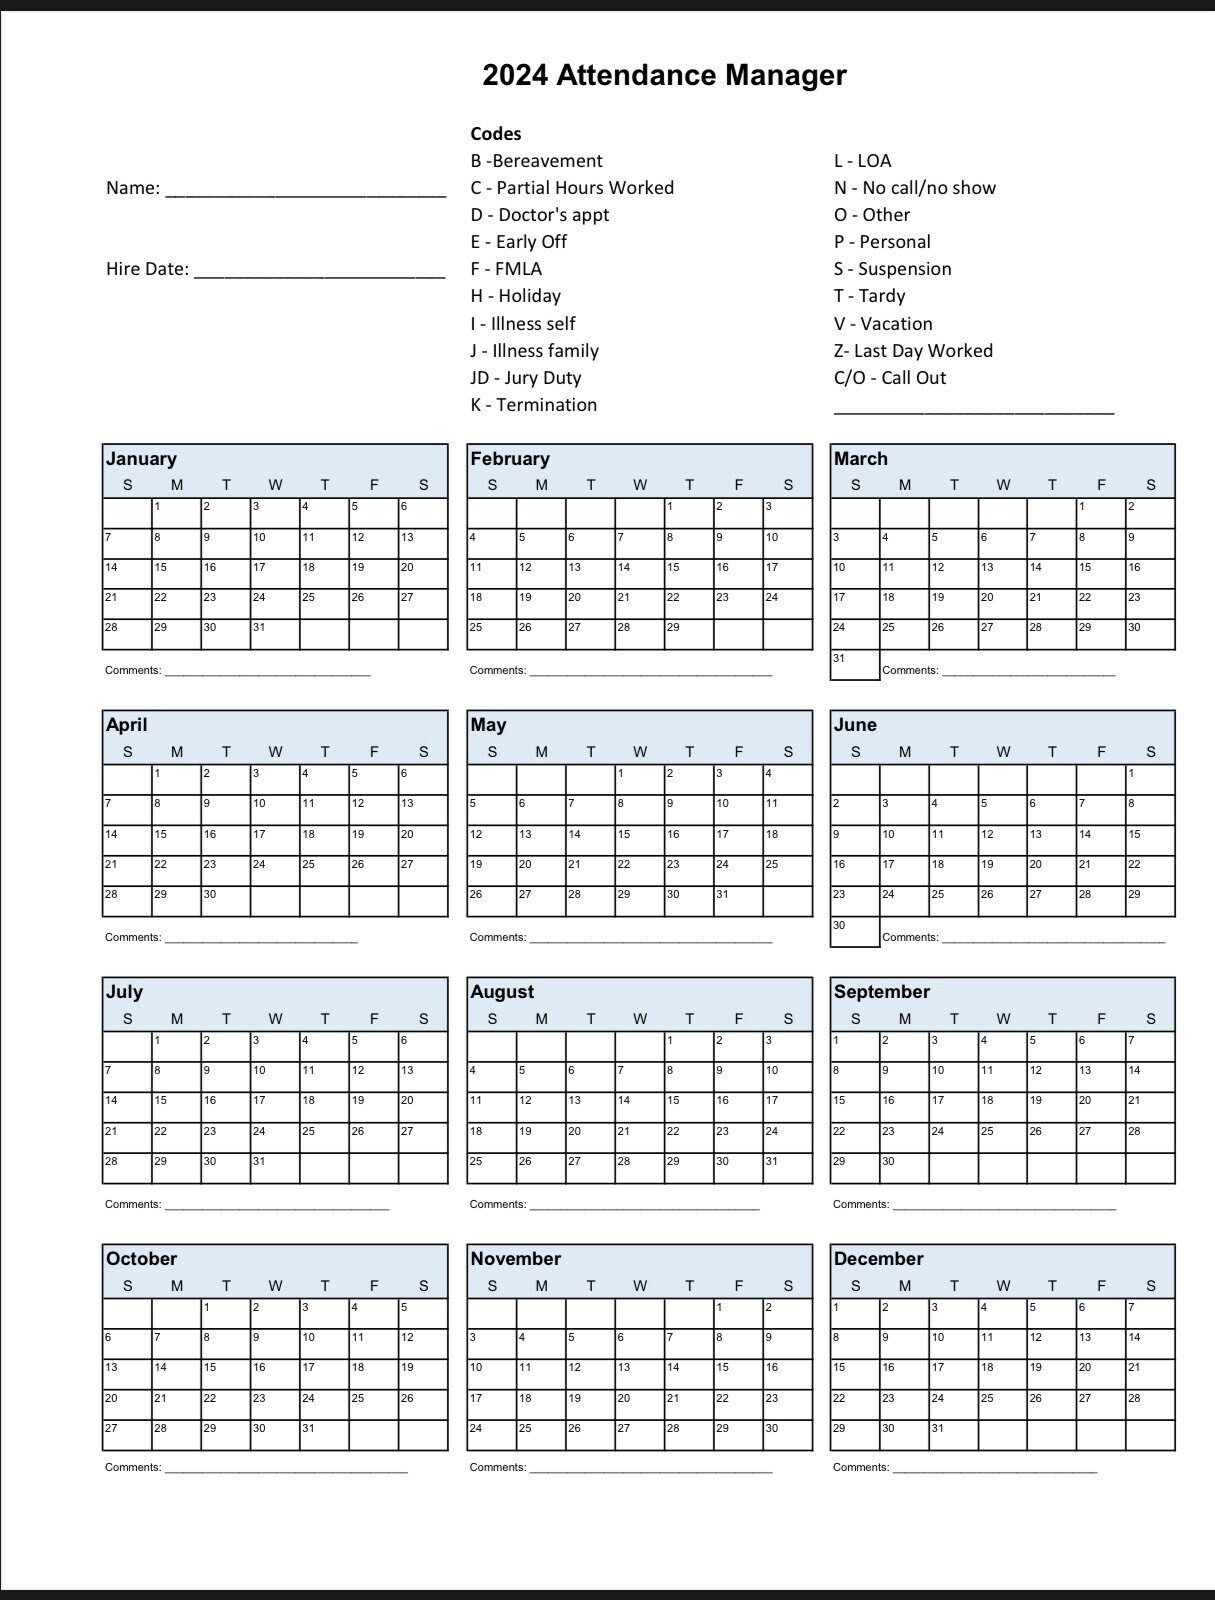 2024 Employee School Attendance Tracker Calendar, Employee pertaining to Attendance Calendar 2024 Template Free